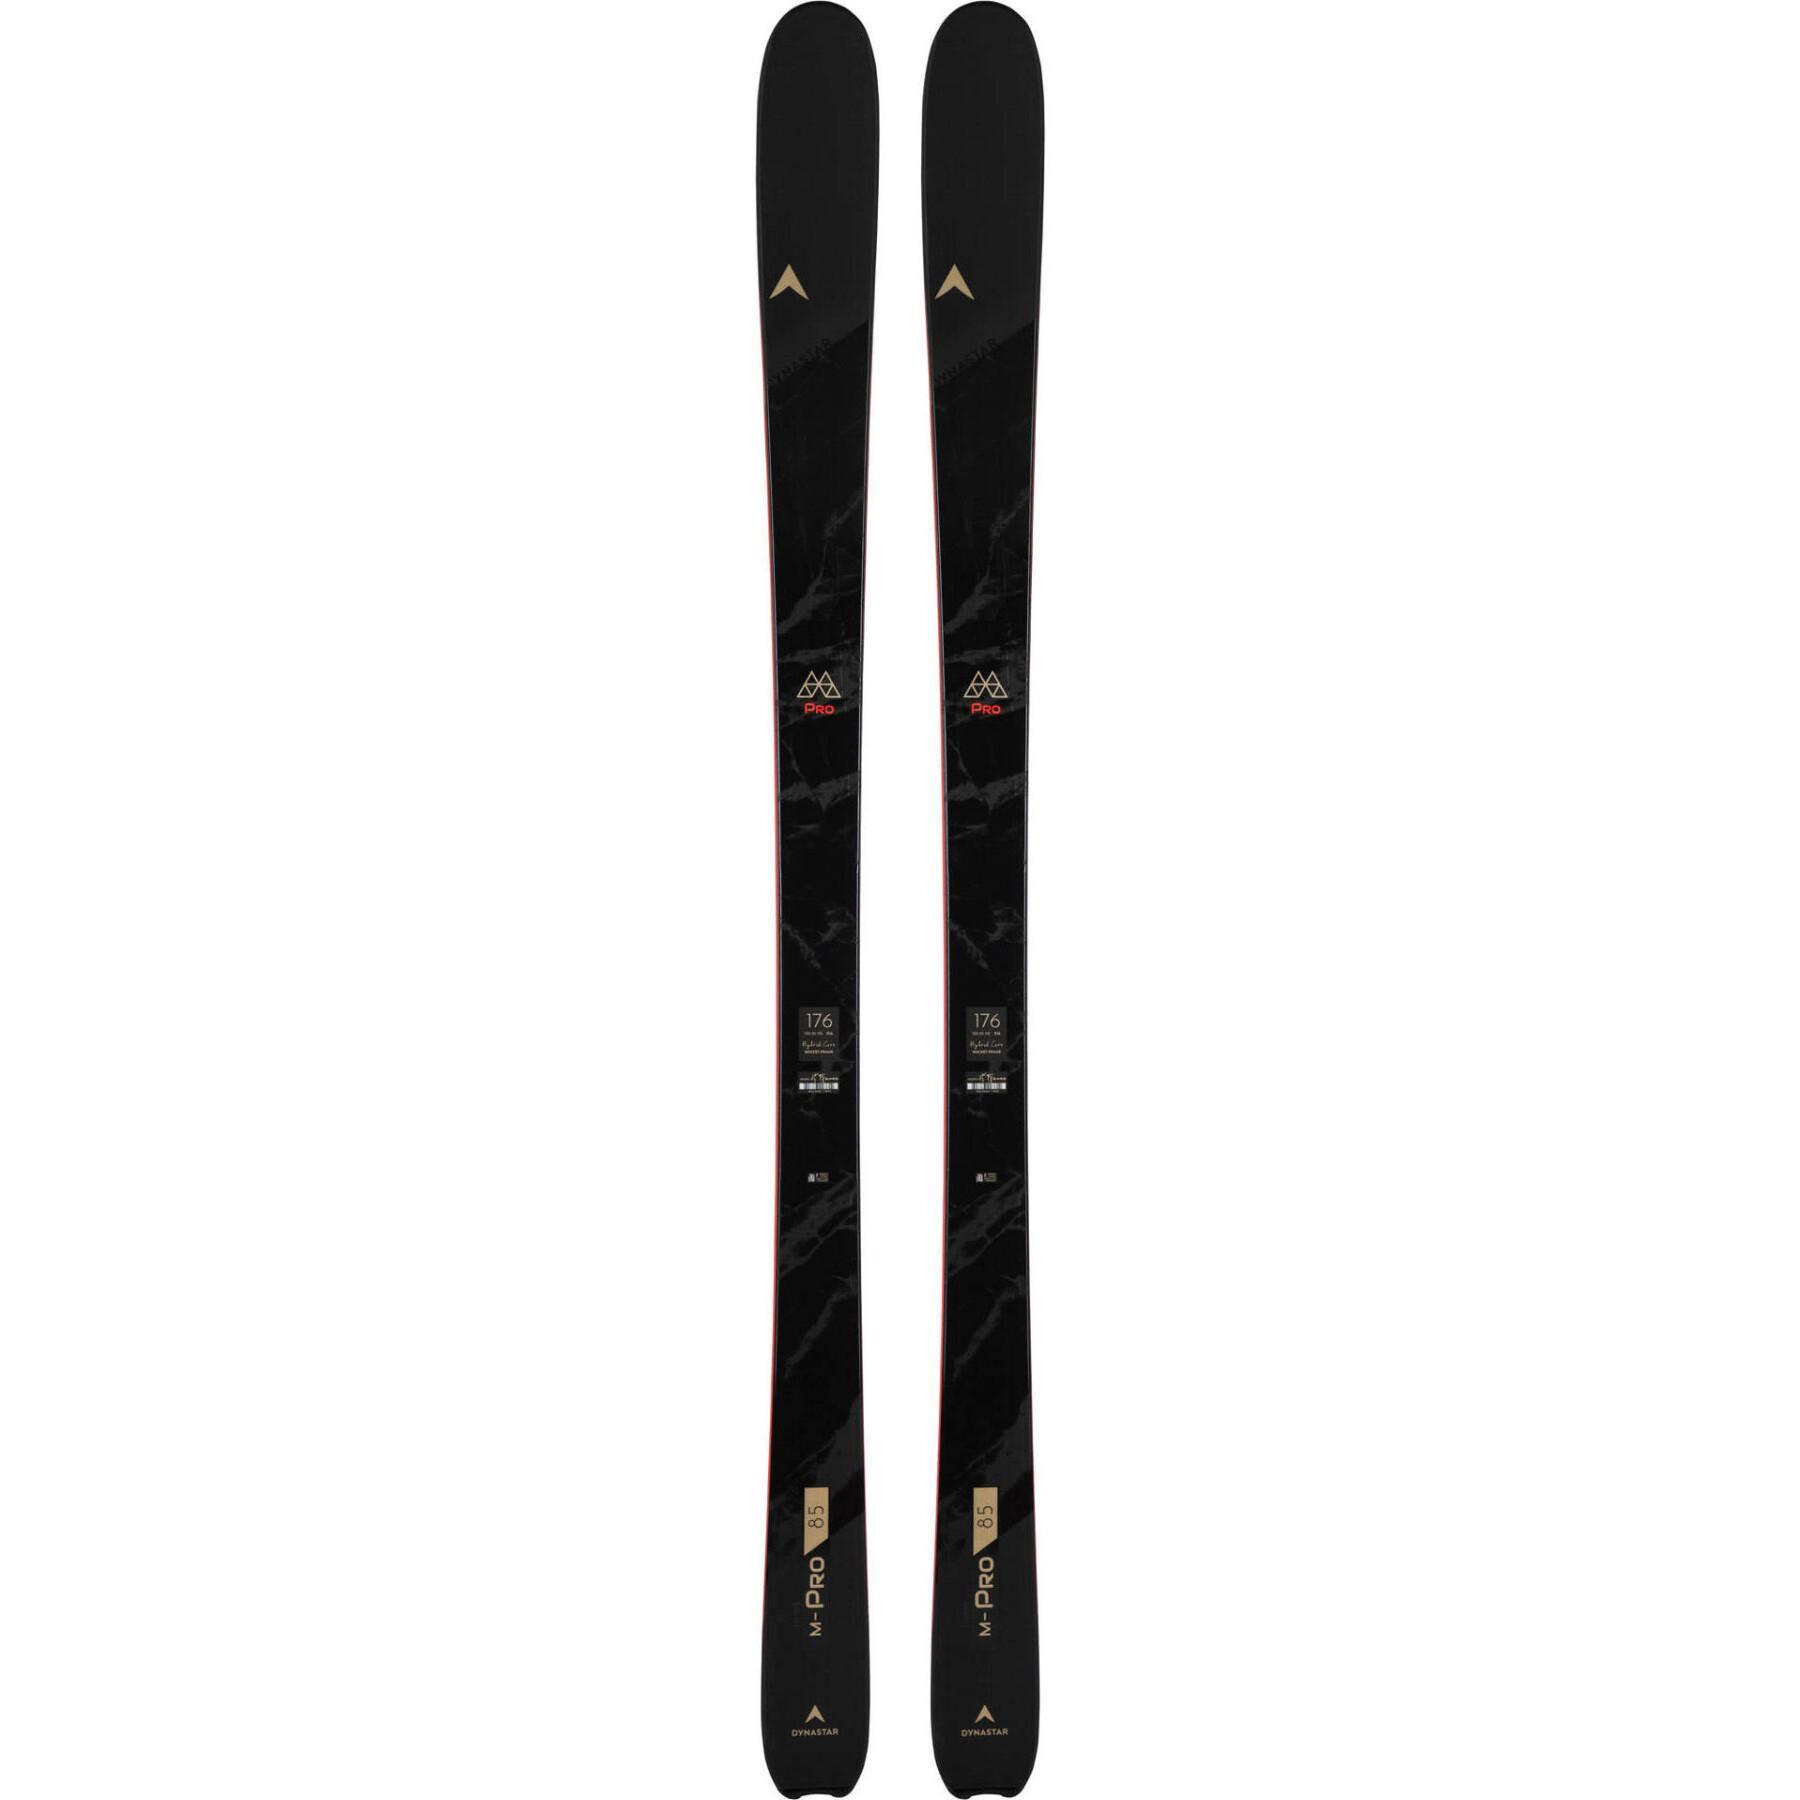 Ski zonder binding Dynastar M-Pro 85 Open